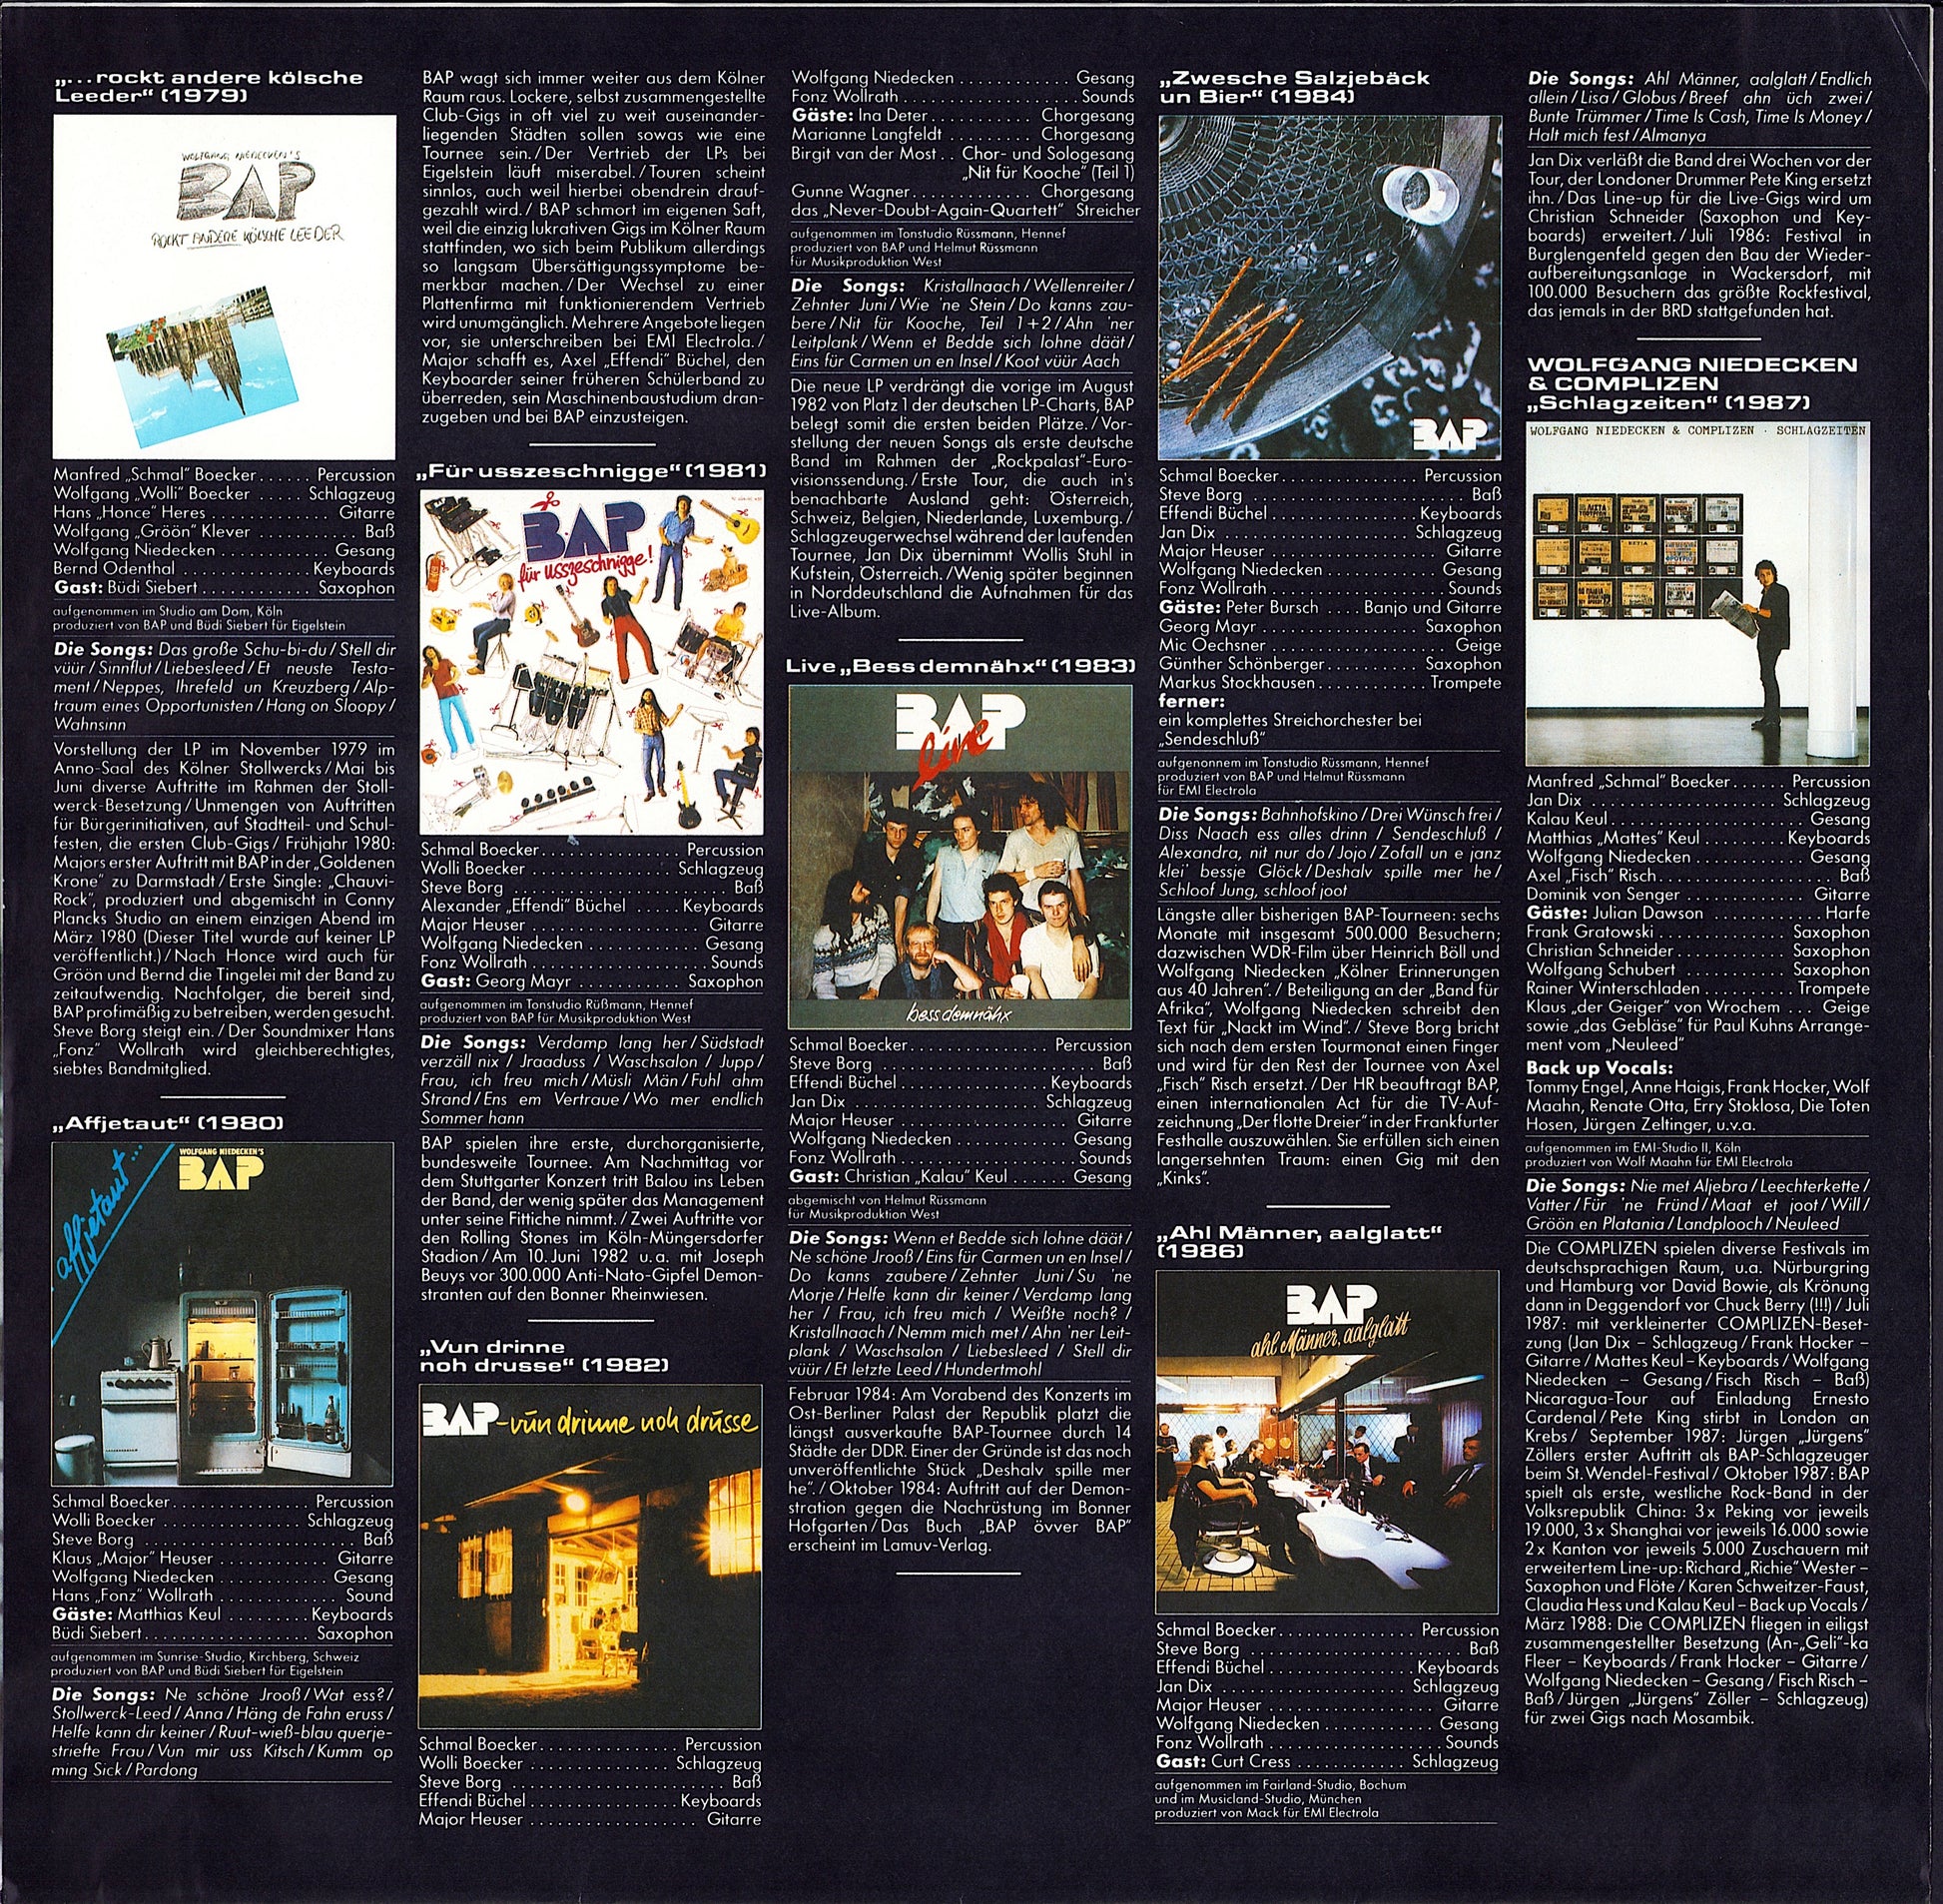 BAP ‎- Da Capo Vinyl LP + Poster